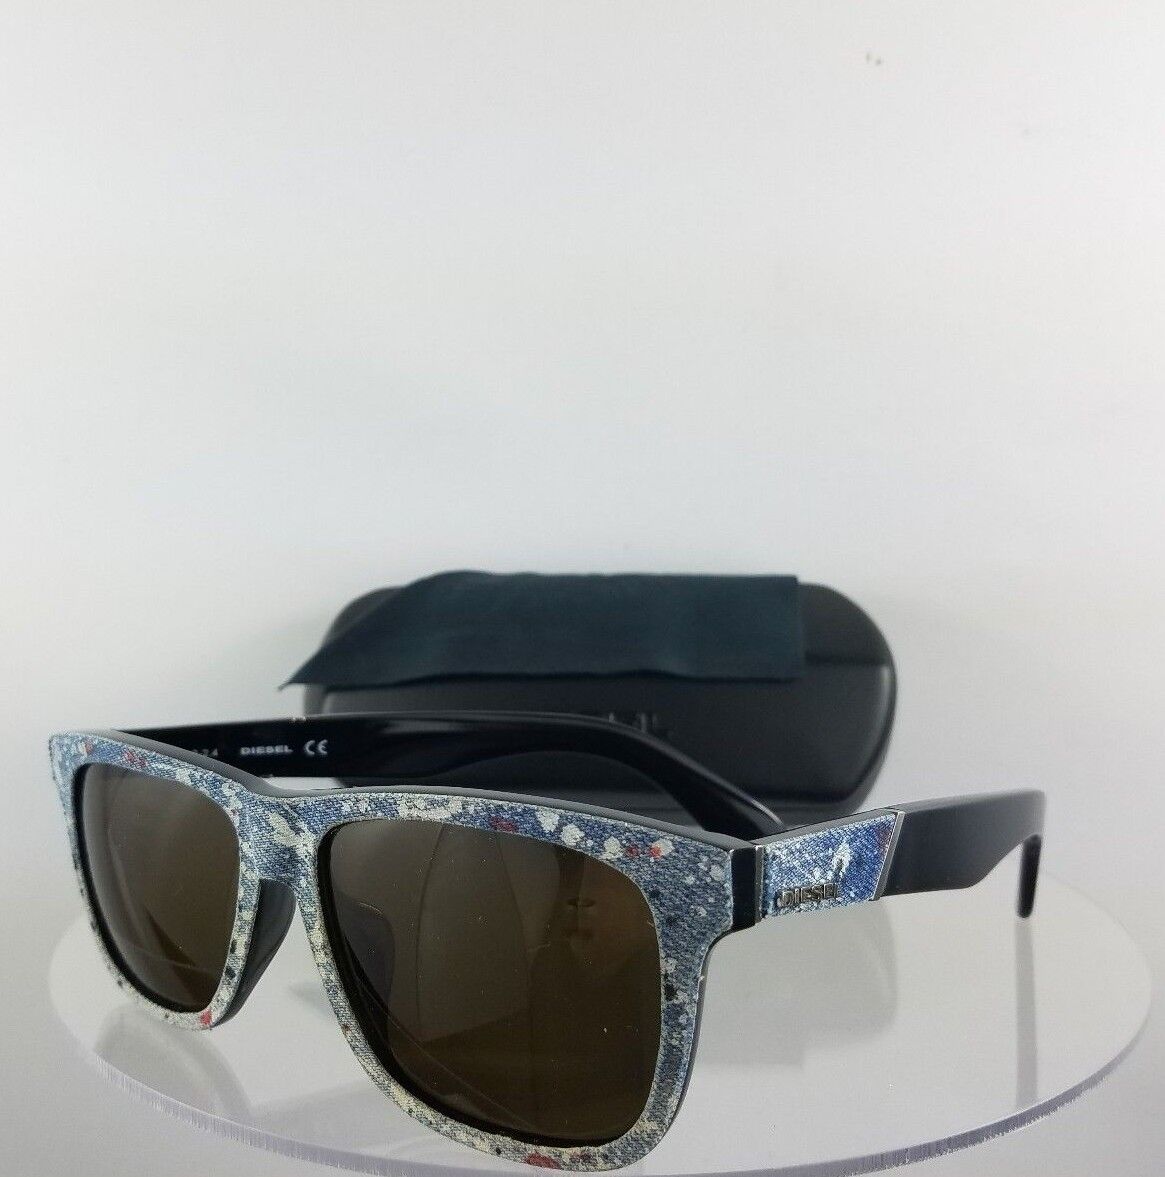 Brand Authentic Brand New Diesel Sunglasses DL 0140-F Col. 05E 56mm #Denimeye